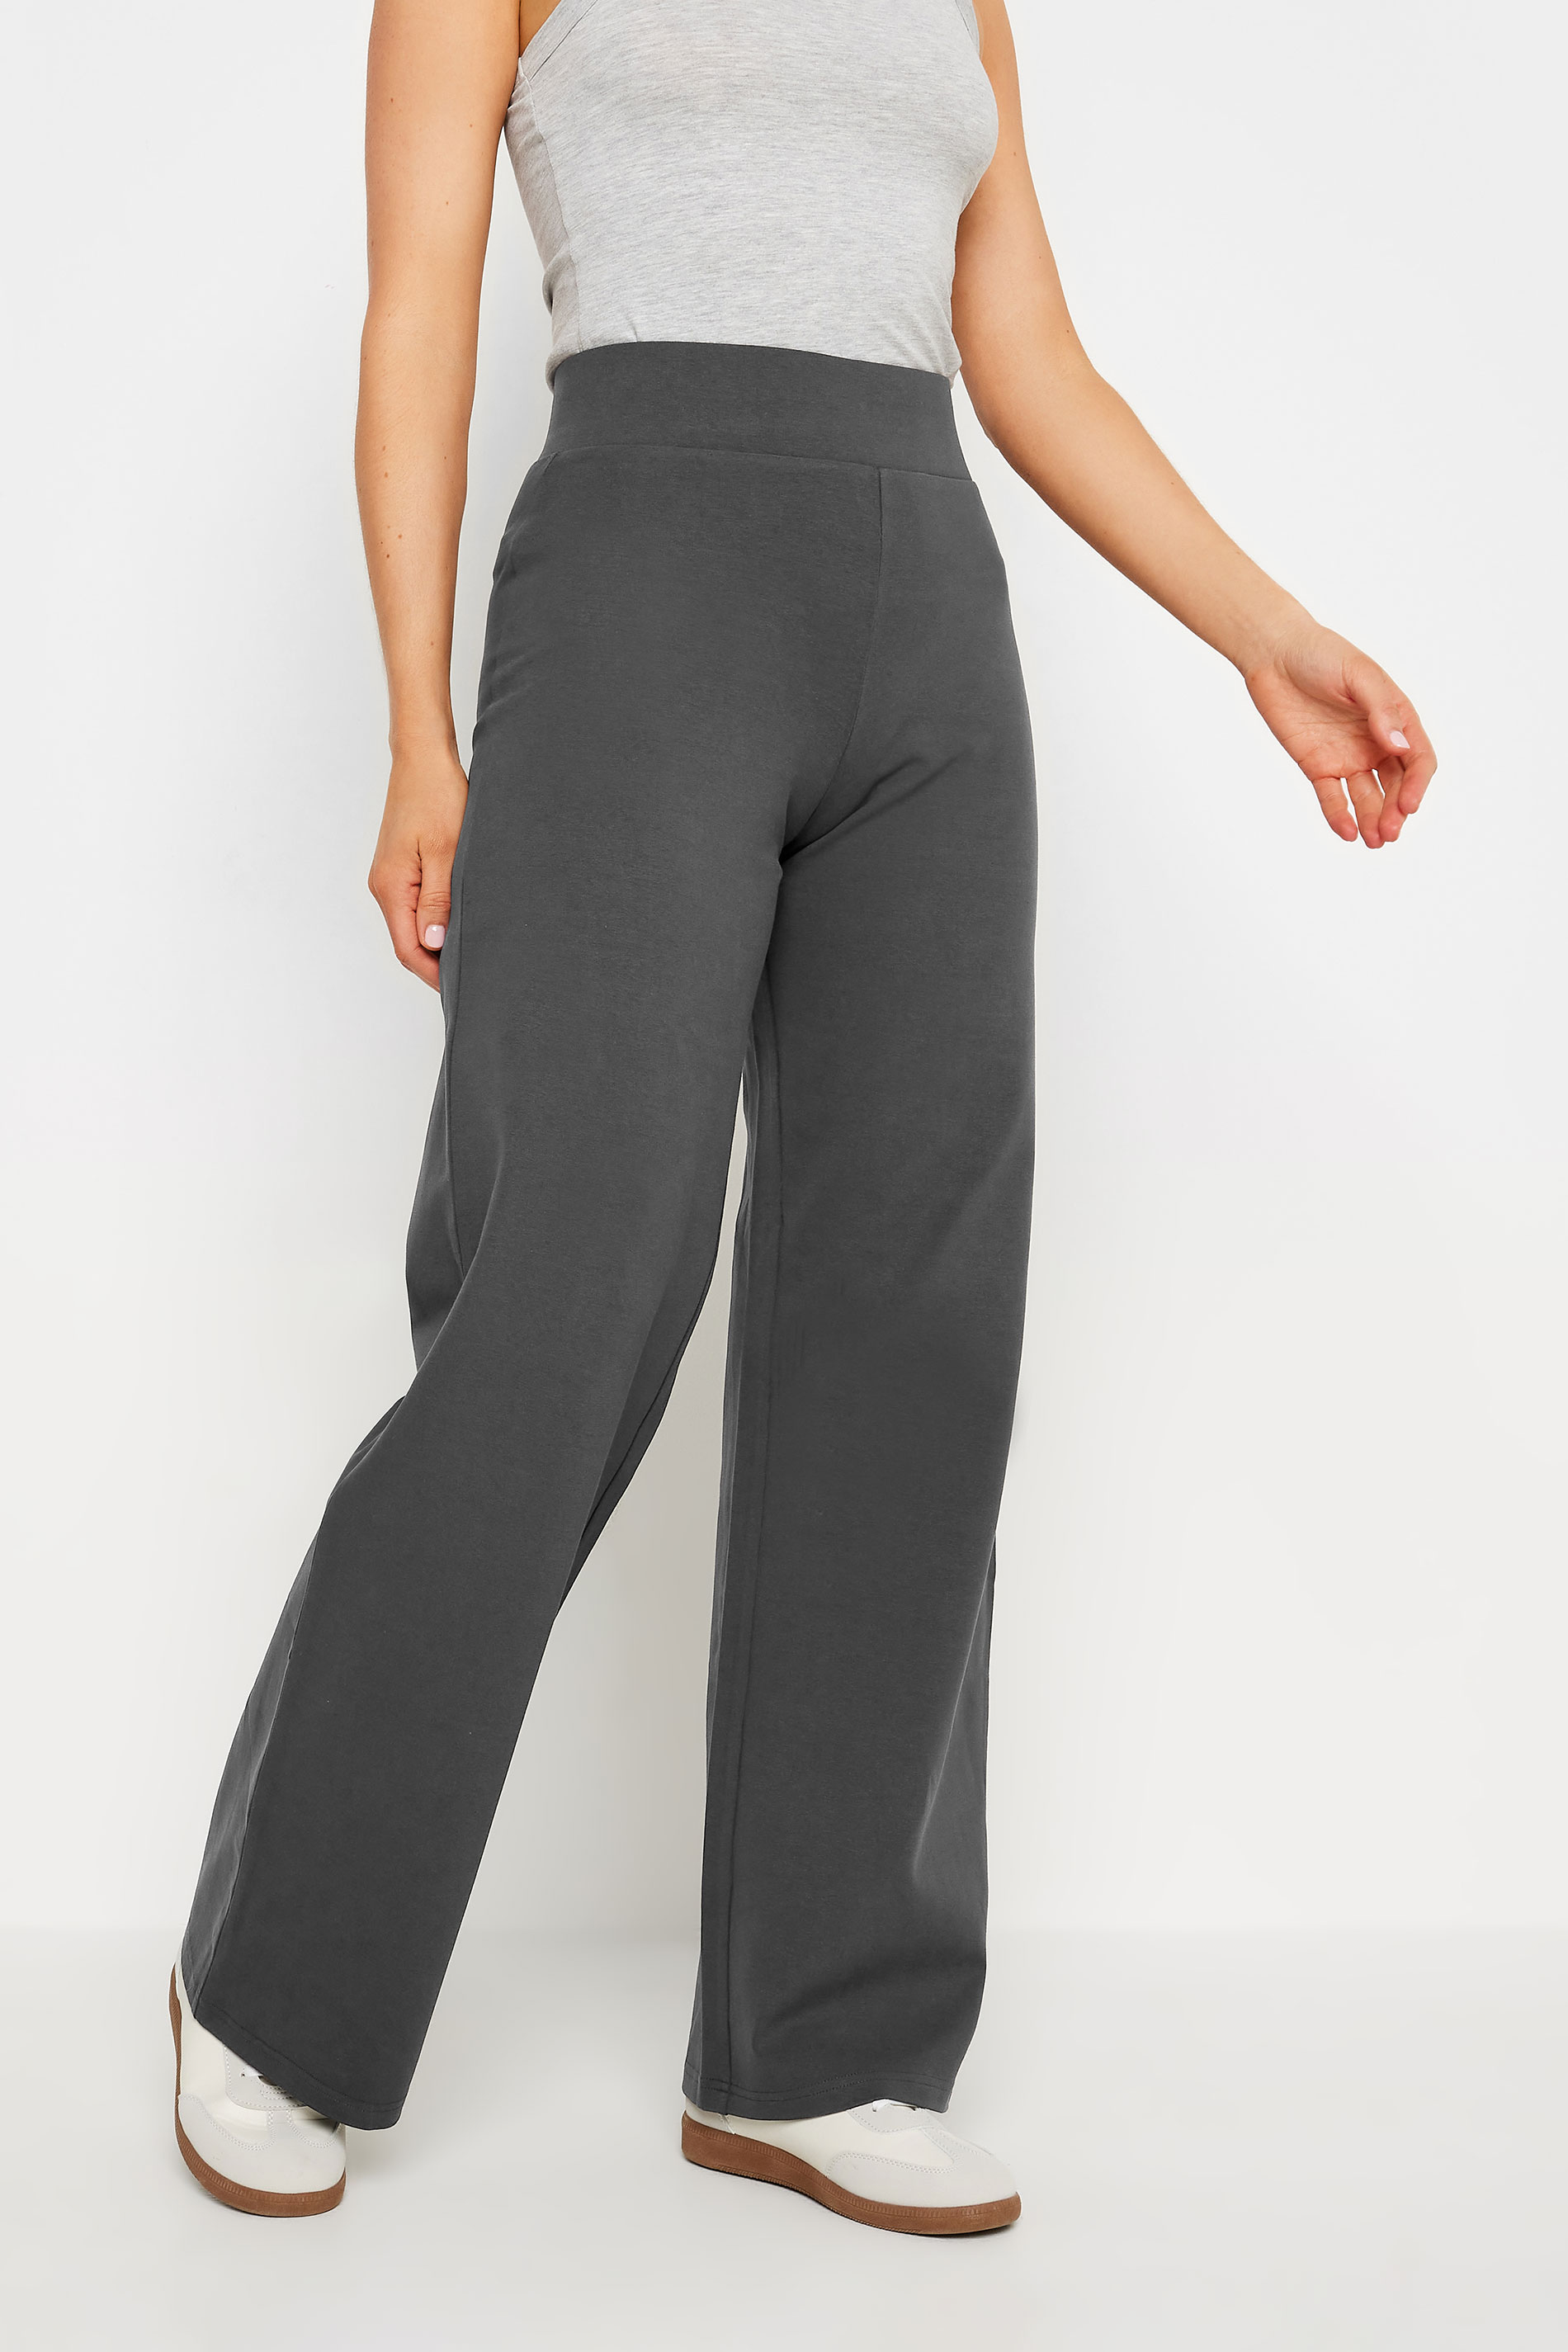 LTS Tall Women's Charcoal Grey Wide Leg Yoga Pants | Long Tall Sally 2